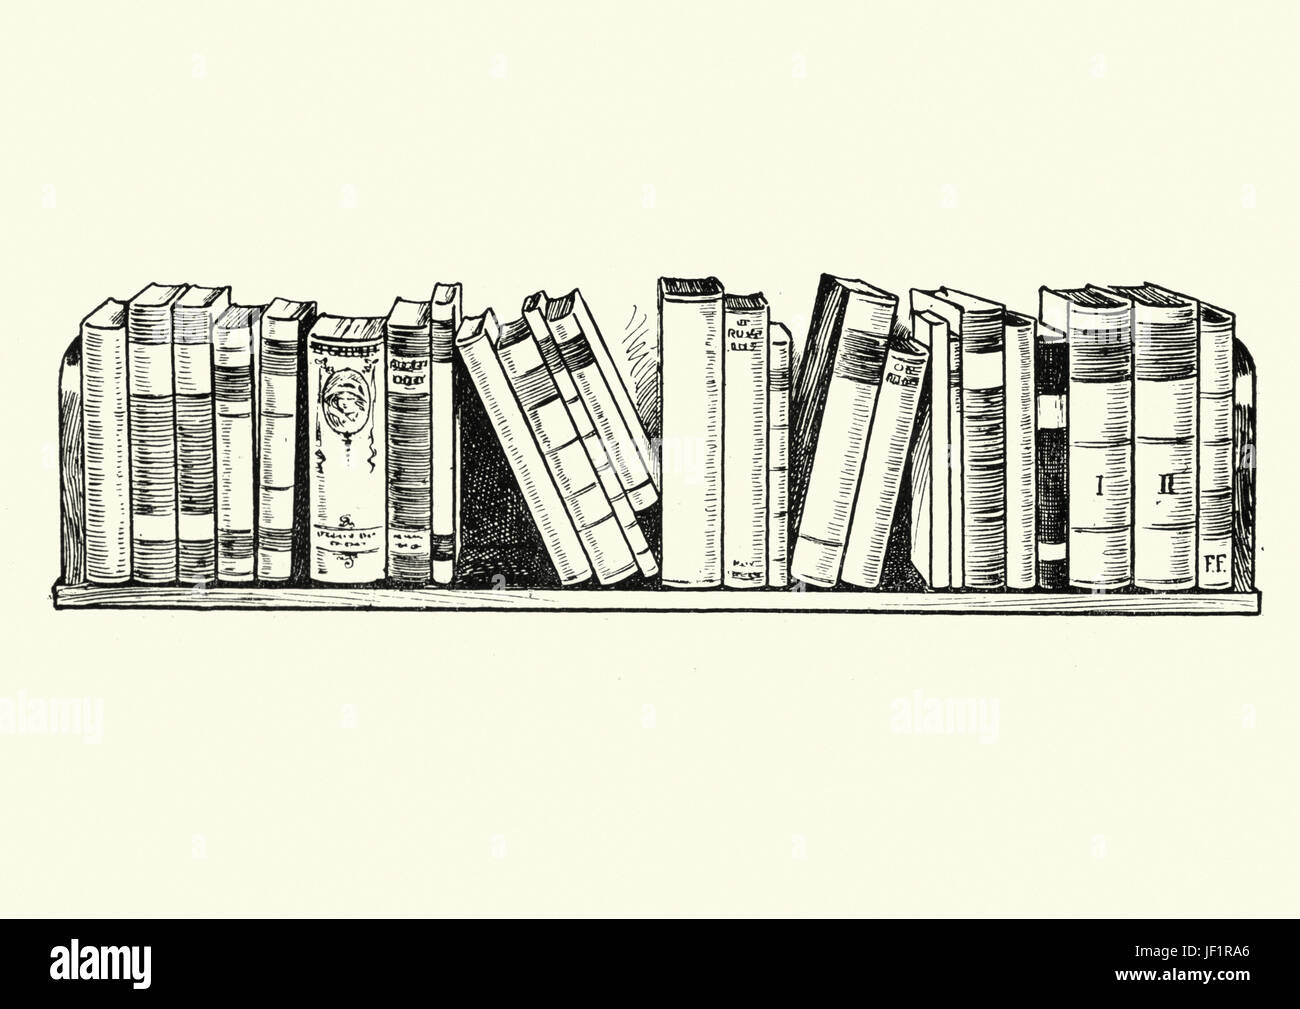 Illustration of books on a shelf Stock Photo